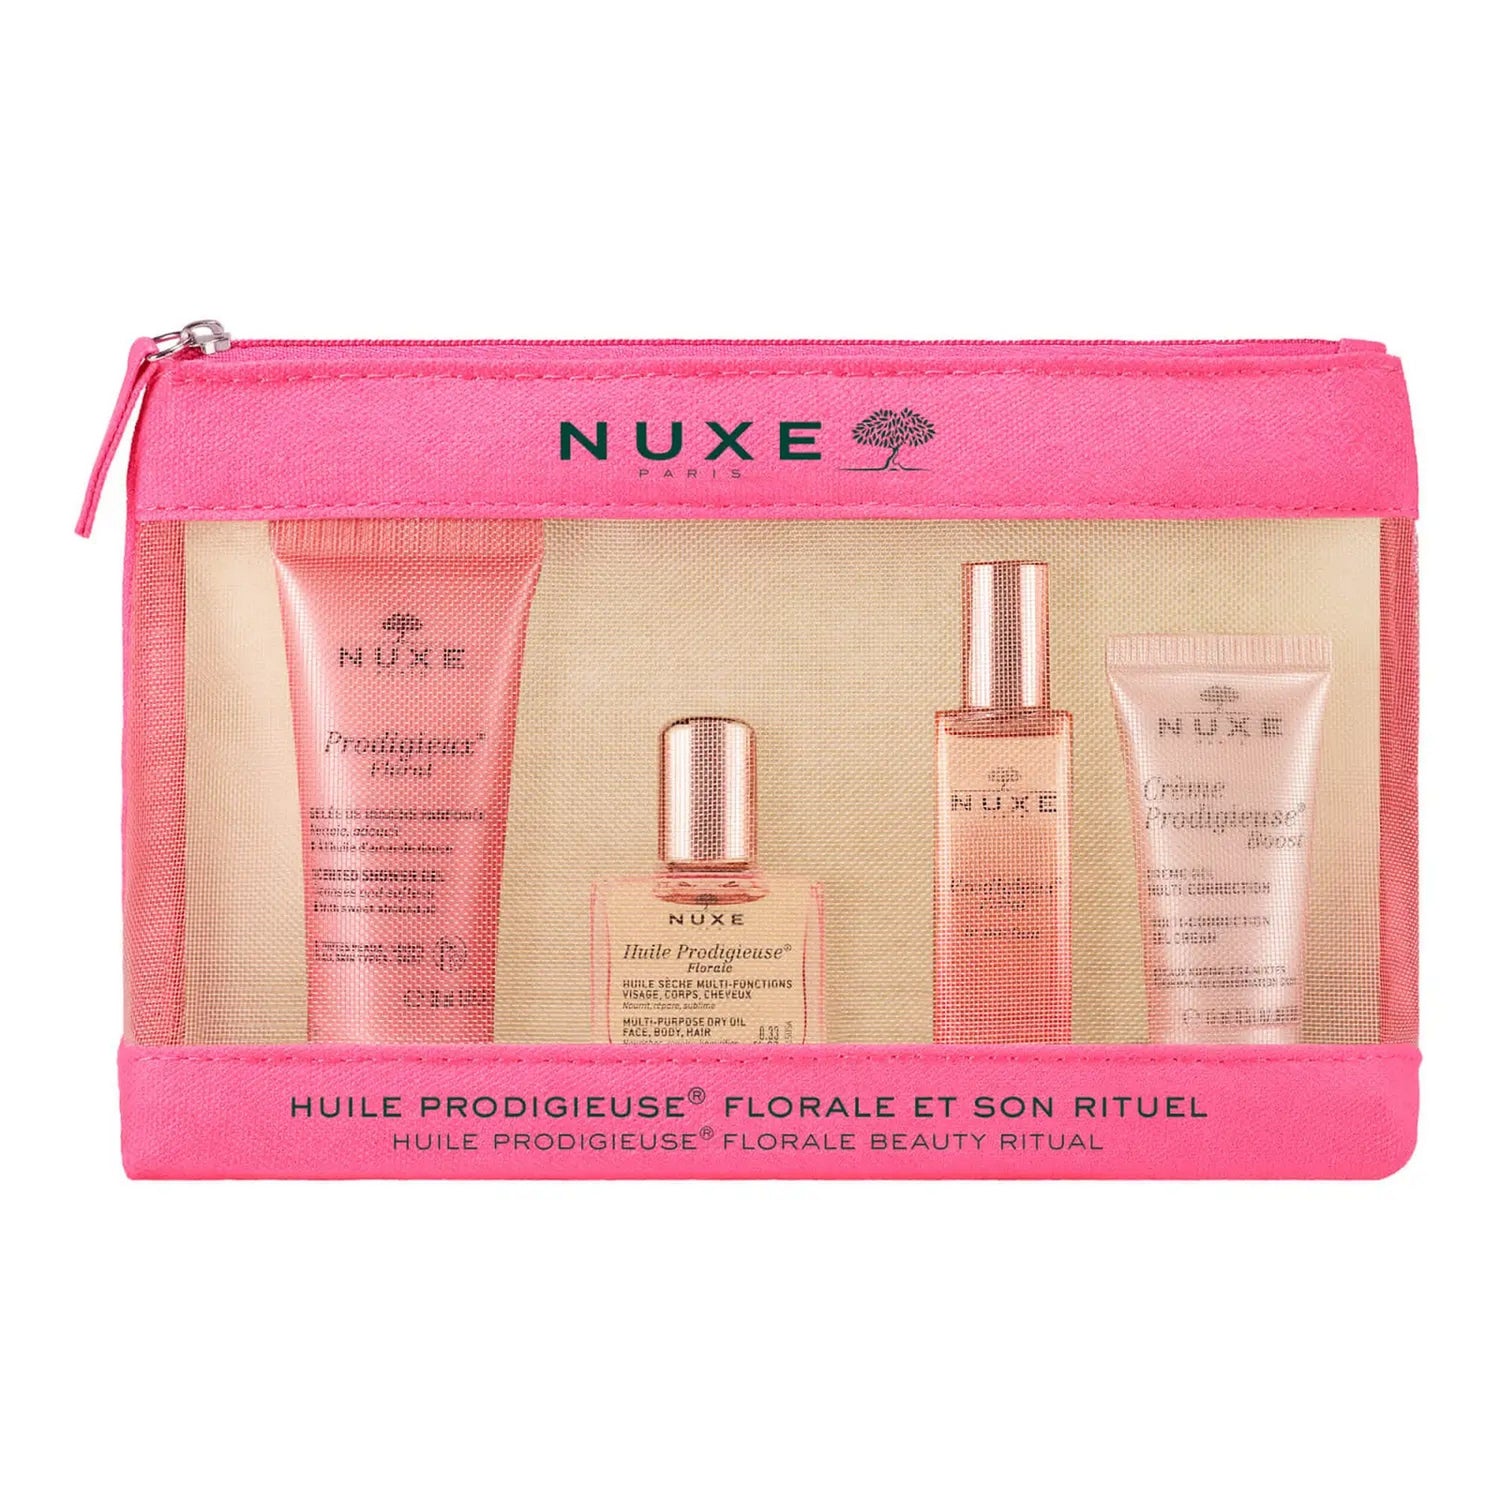 Nuxe Prodigieux Florale Beauty Travel Kit